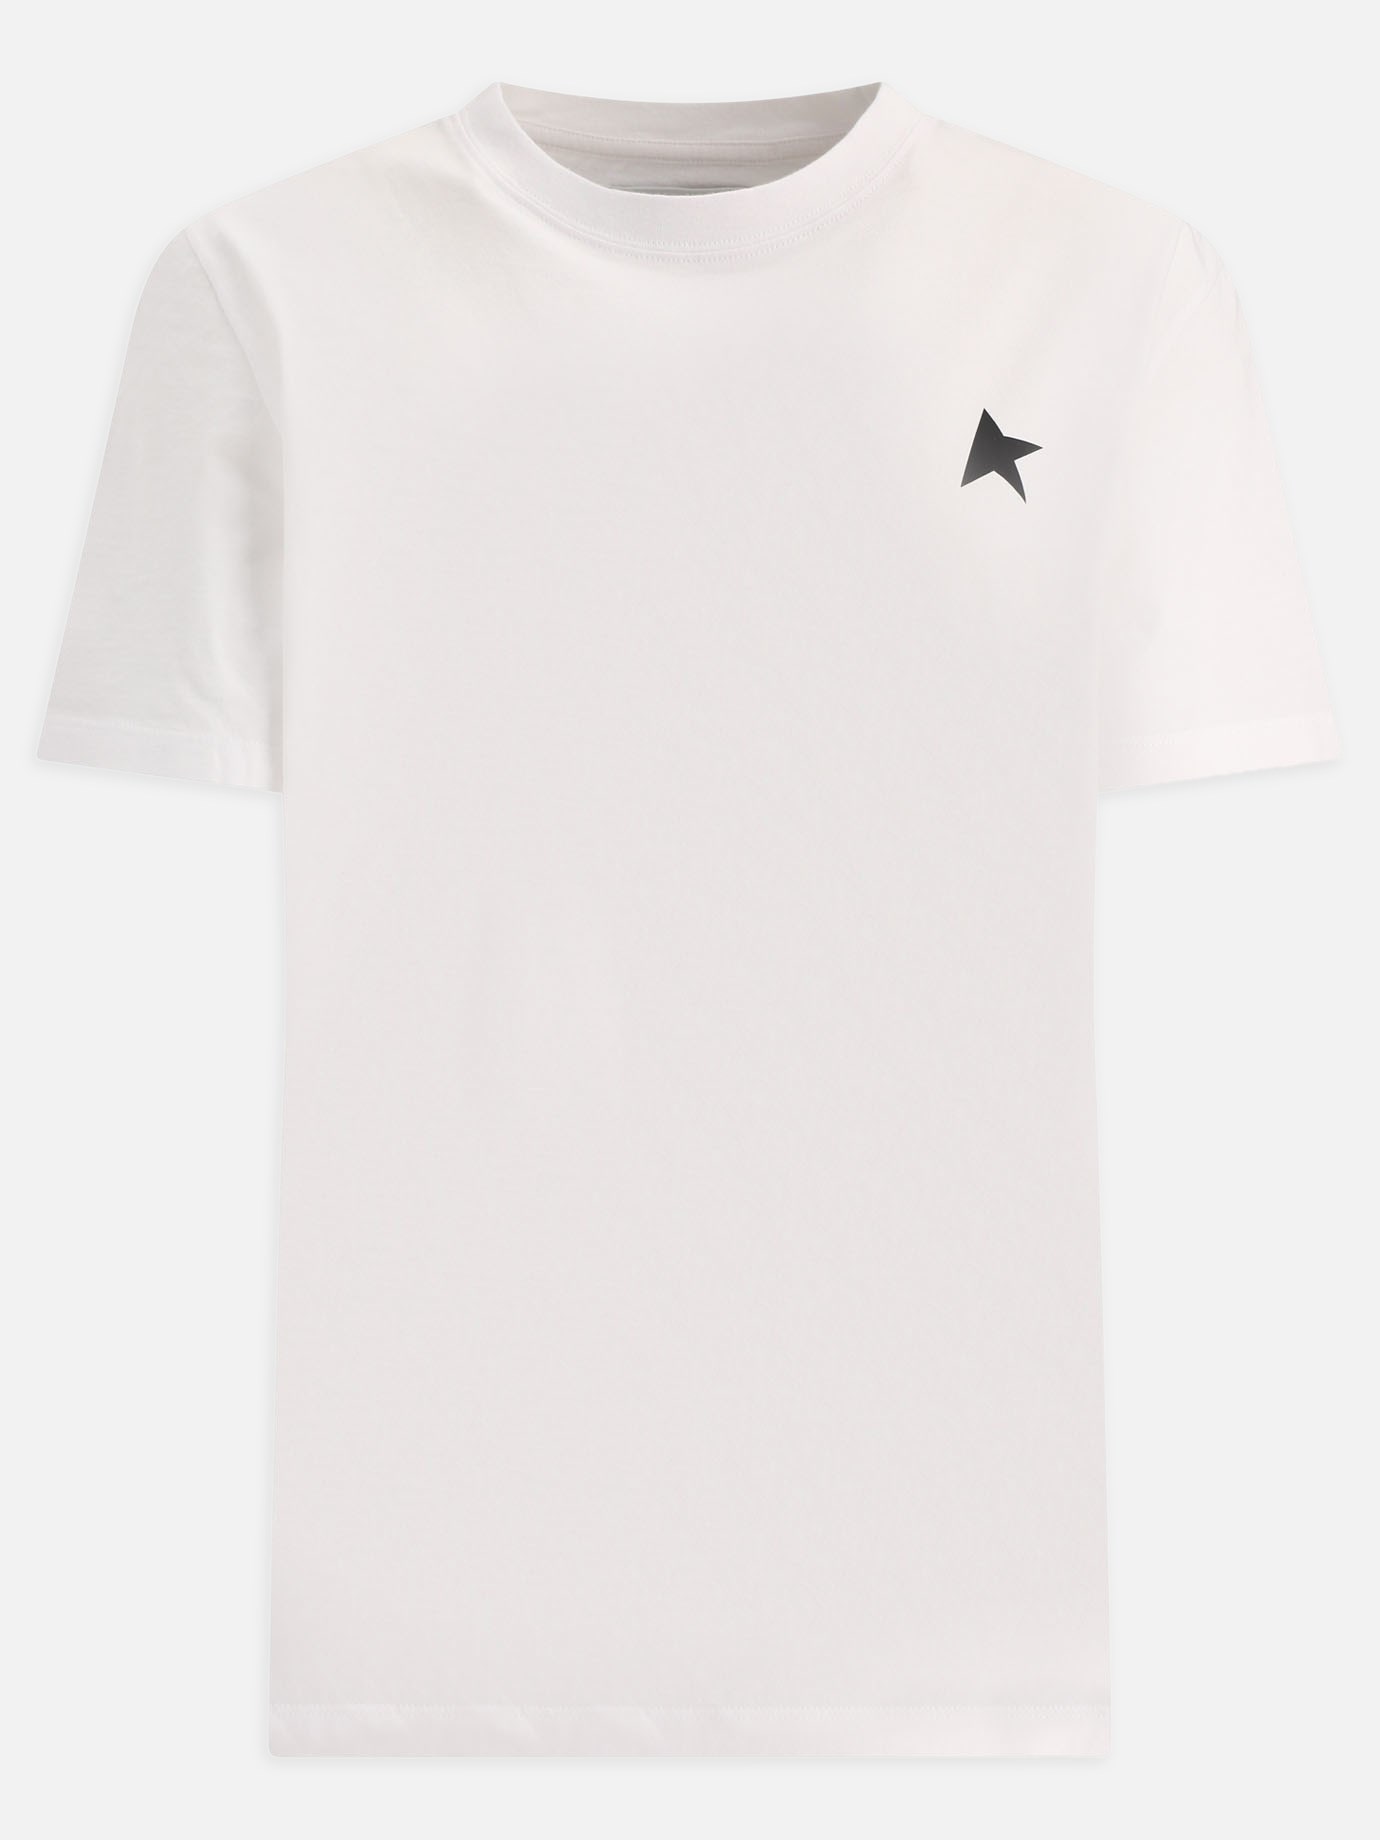  Small Star  t-shirtby Golden Goose - 5